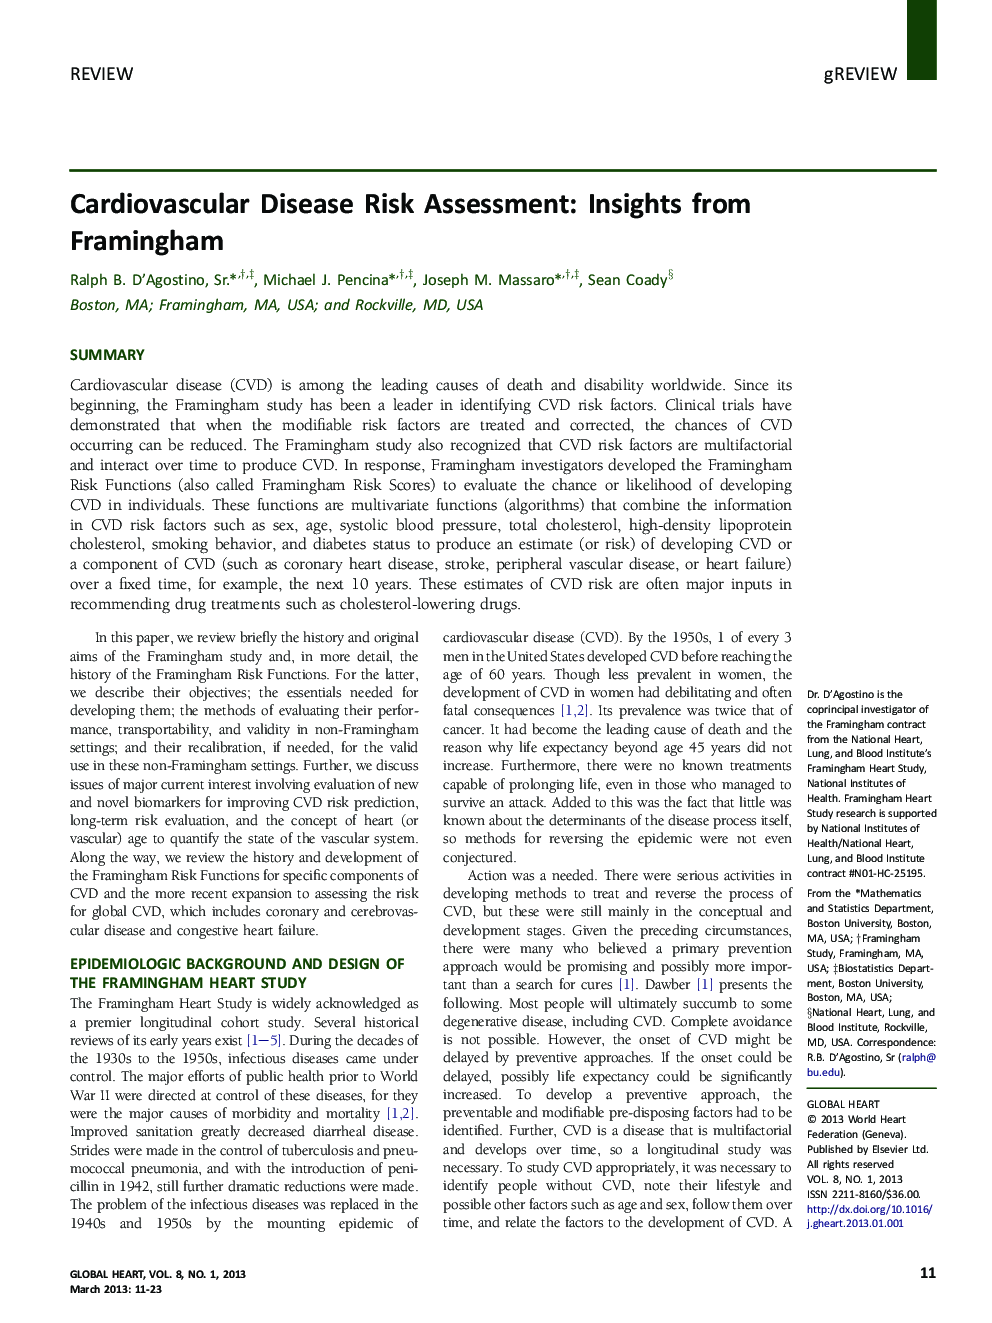 Cardiovascular Disease Risk Assessment: Insights from Framingham